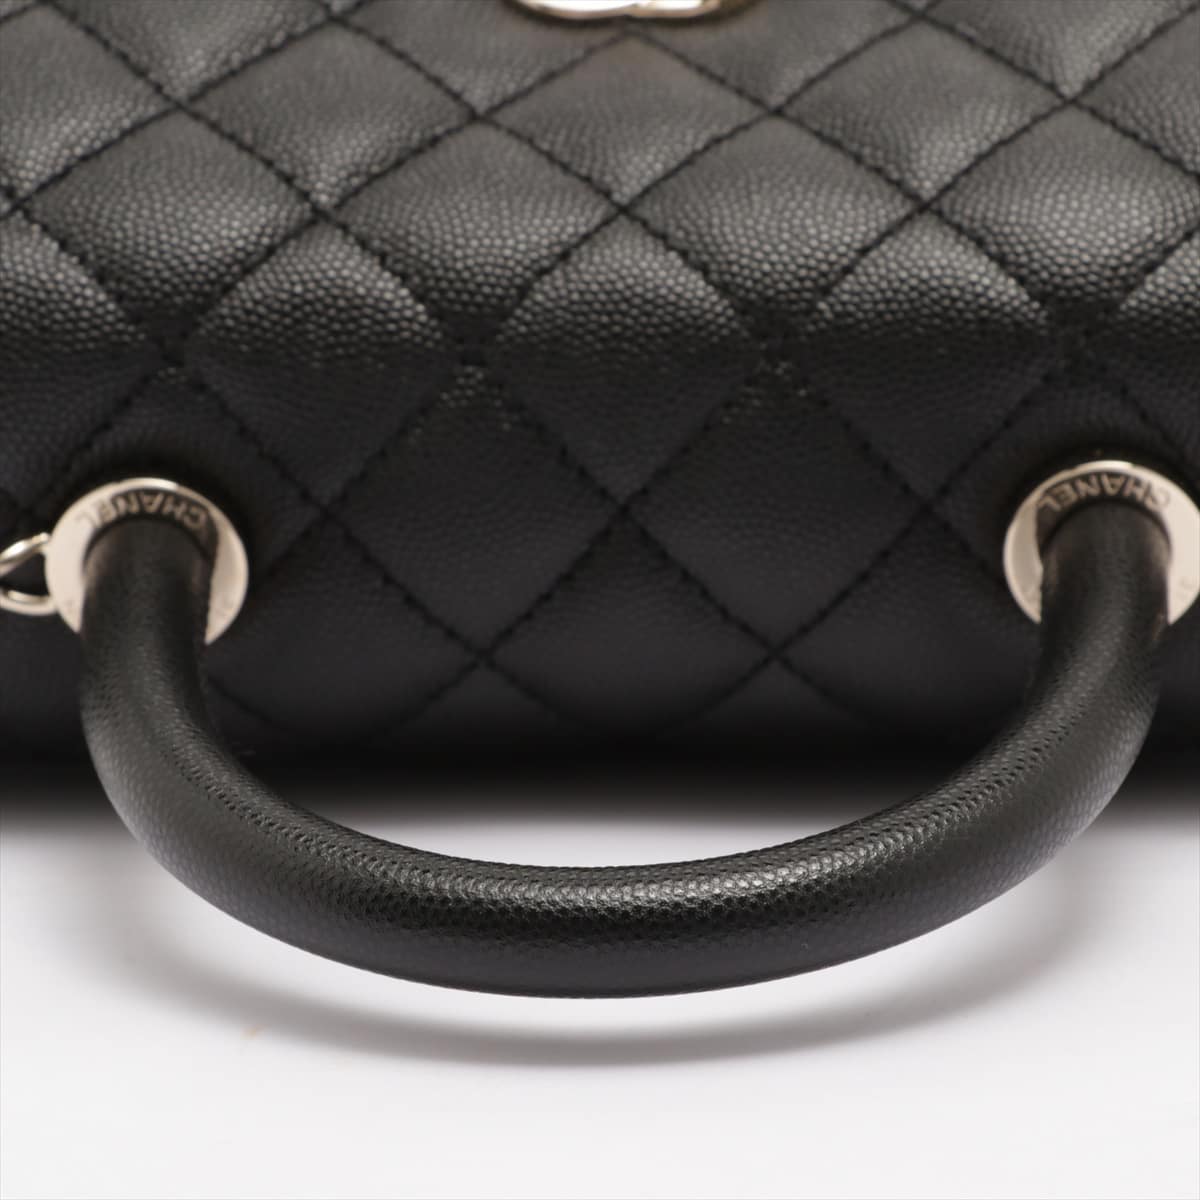 Chanel Coco Handle Caviarskin 2way handbag Black Champagne gold hardware 30